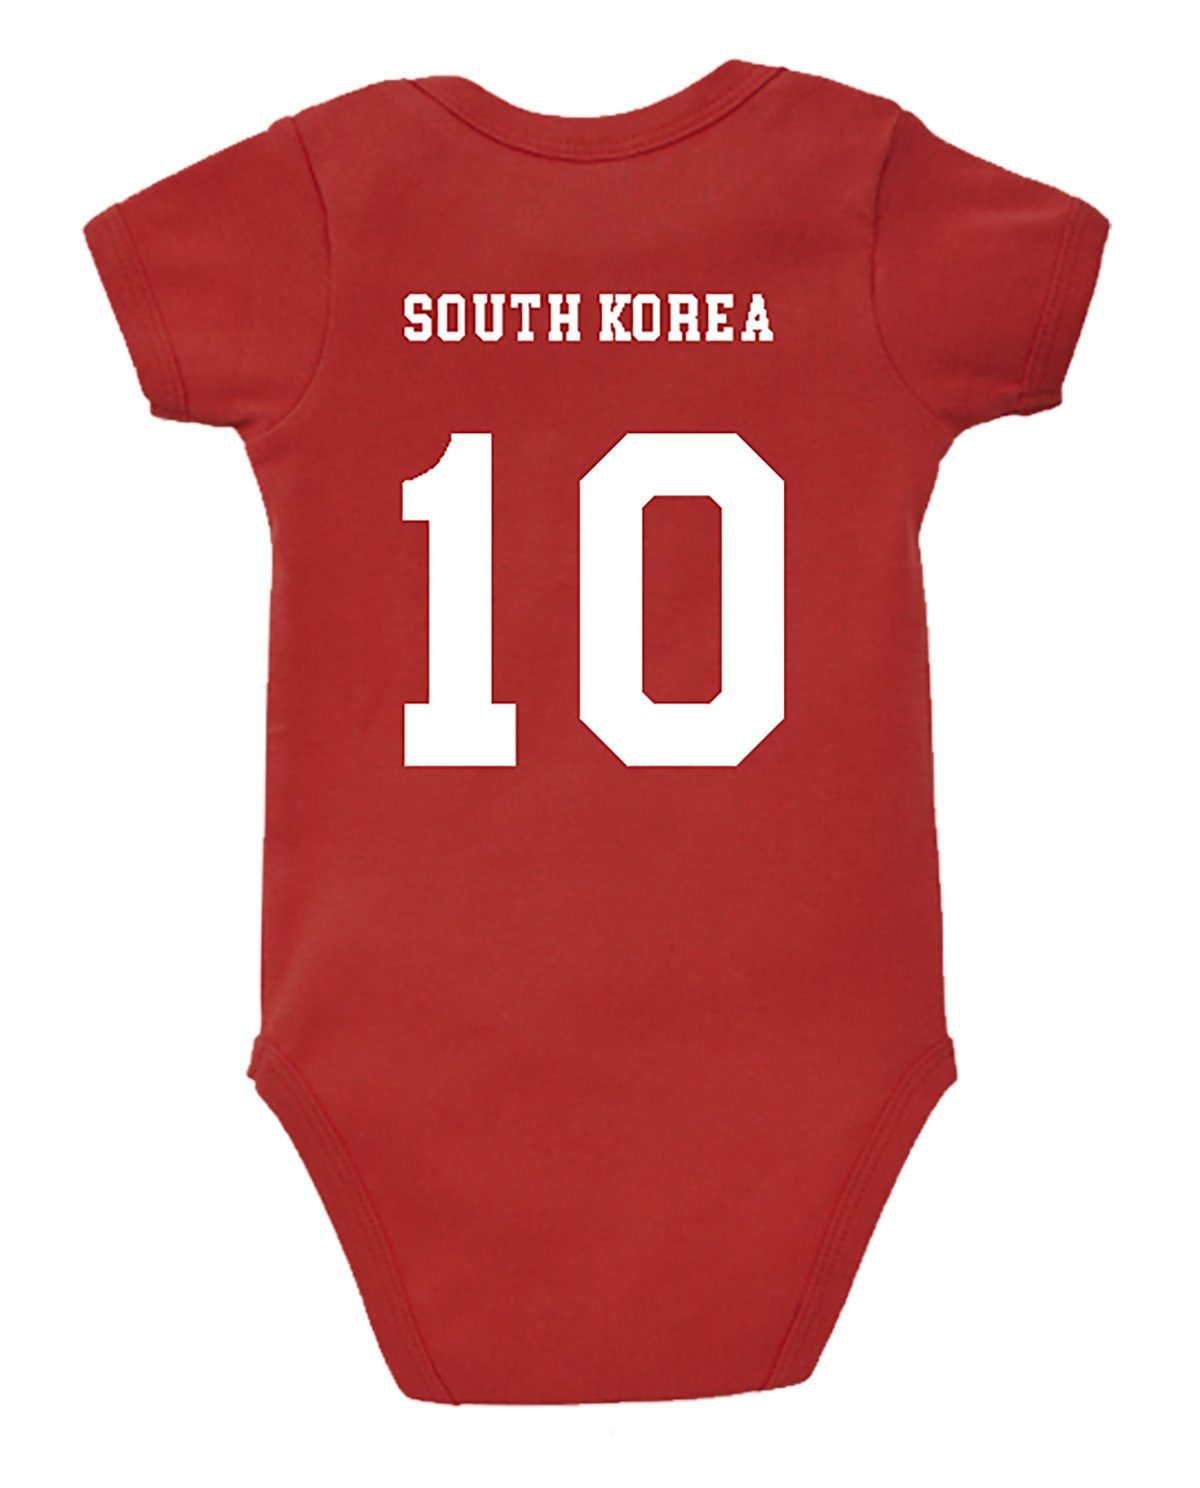 mit Designz Strampler trendigem Südkorea Motiv Kinder Body Baby Youth Kurzarmbody